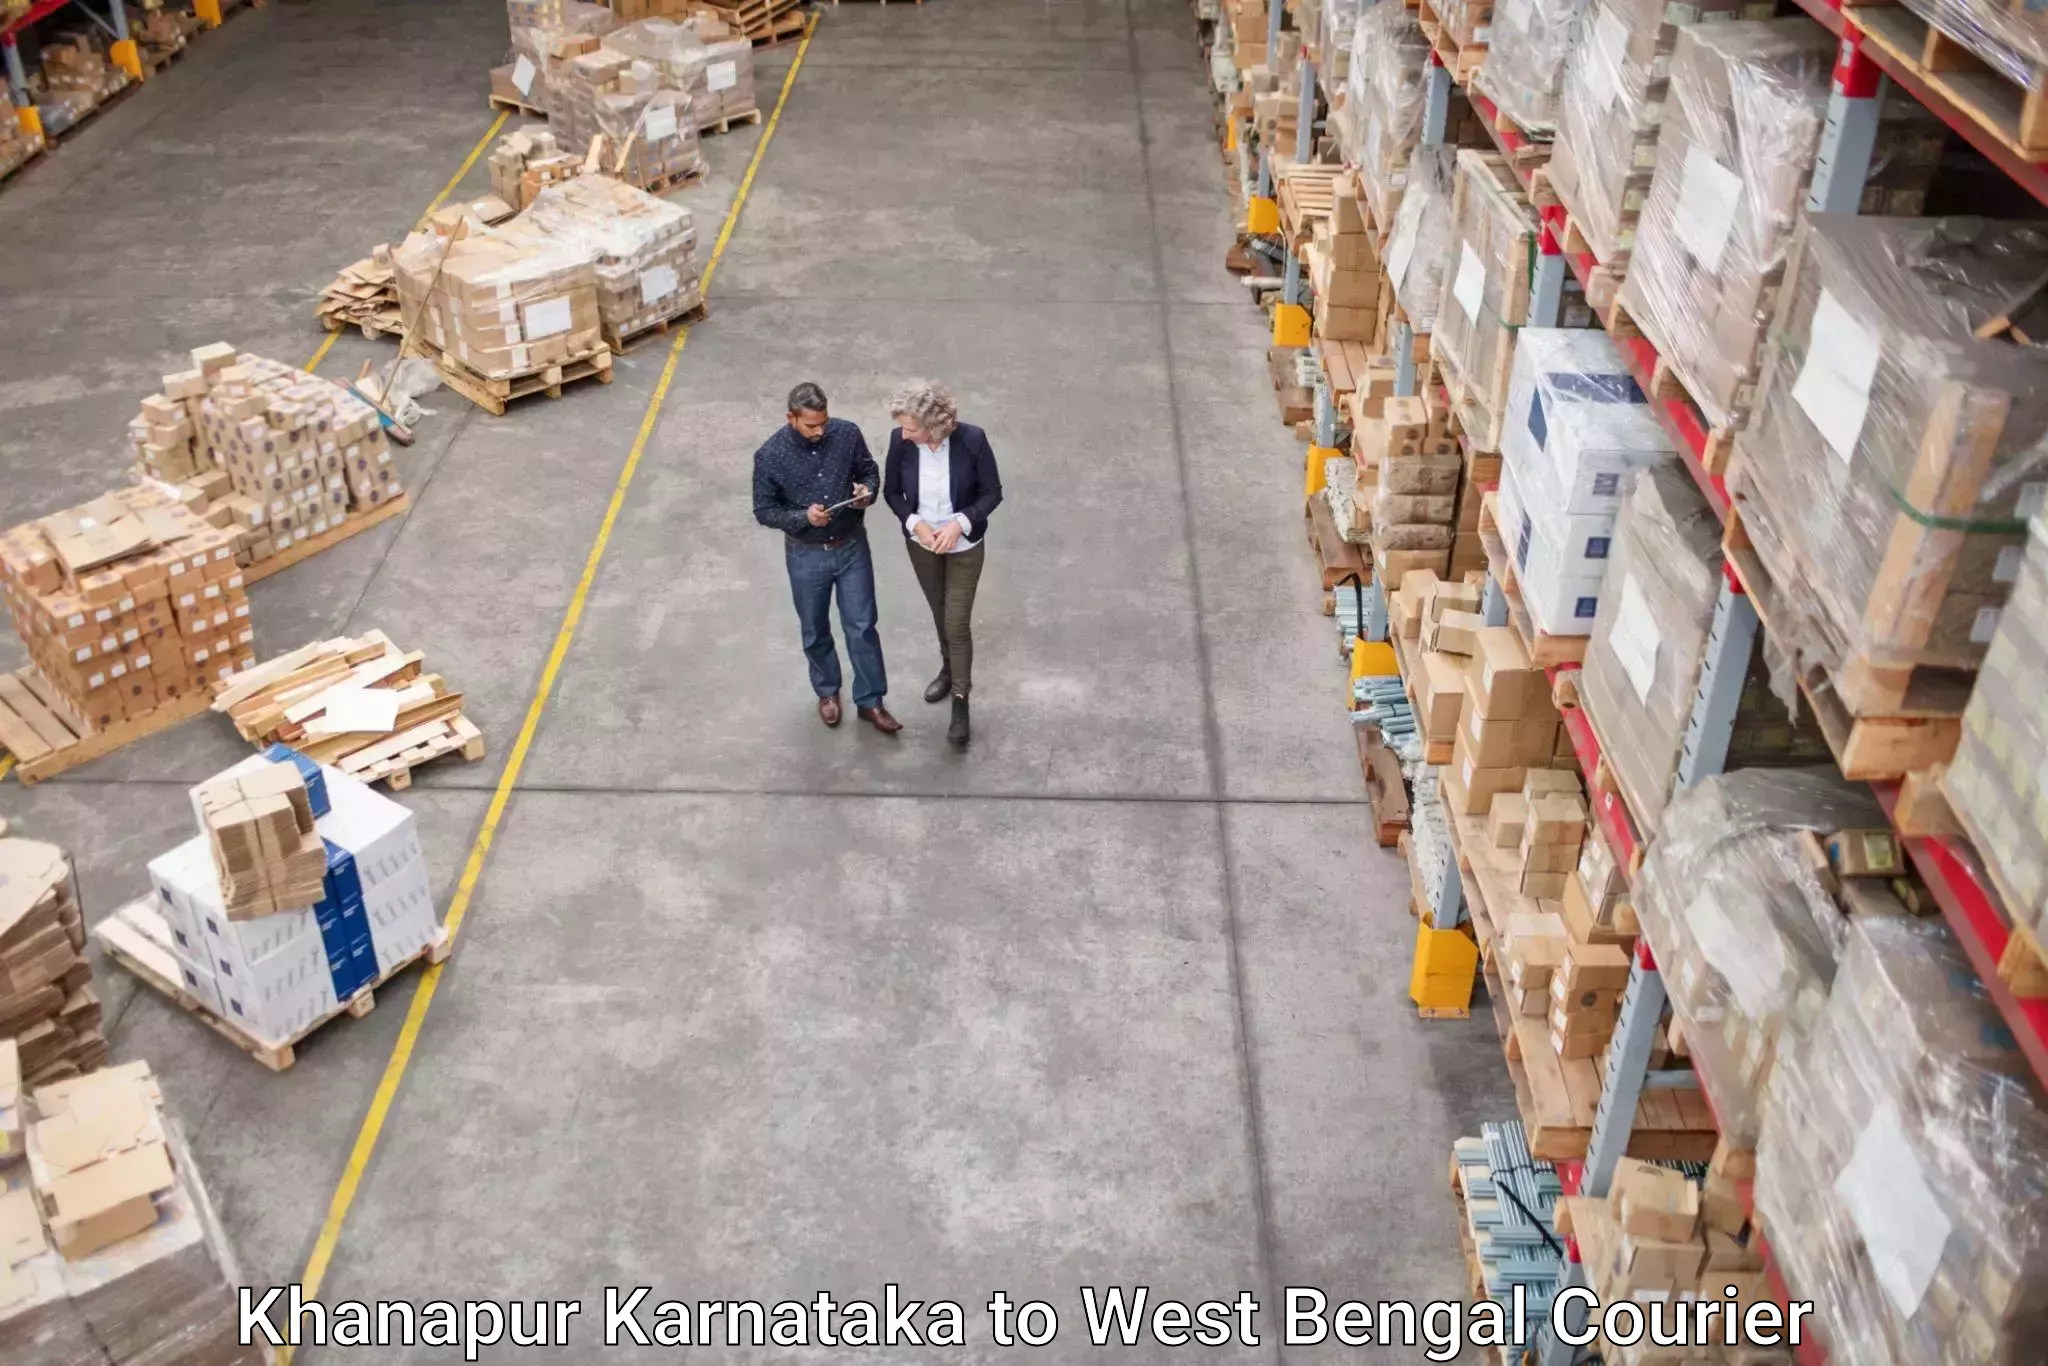 Cargo delivery service Khanapur Karnataka to Swarupnagar